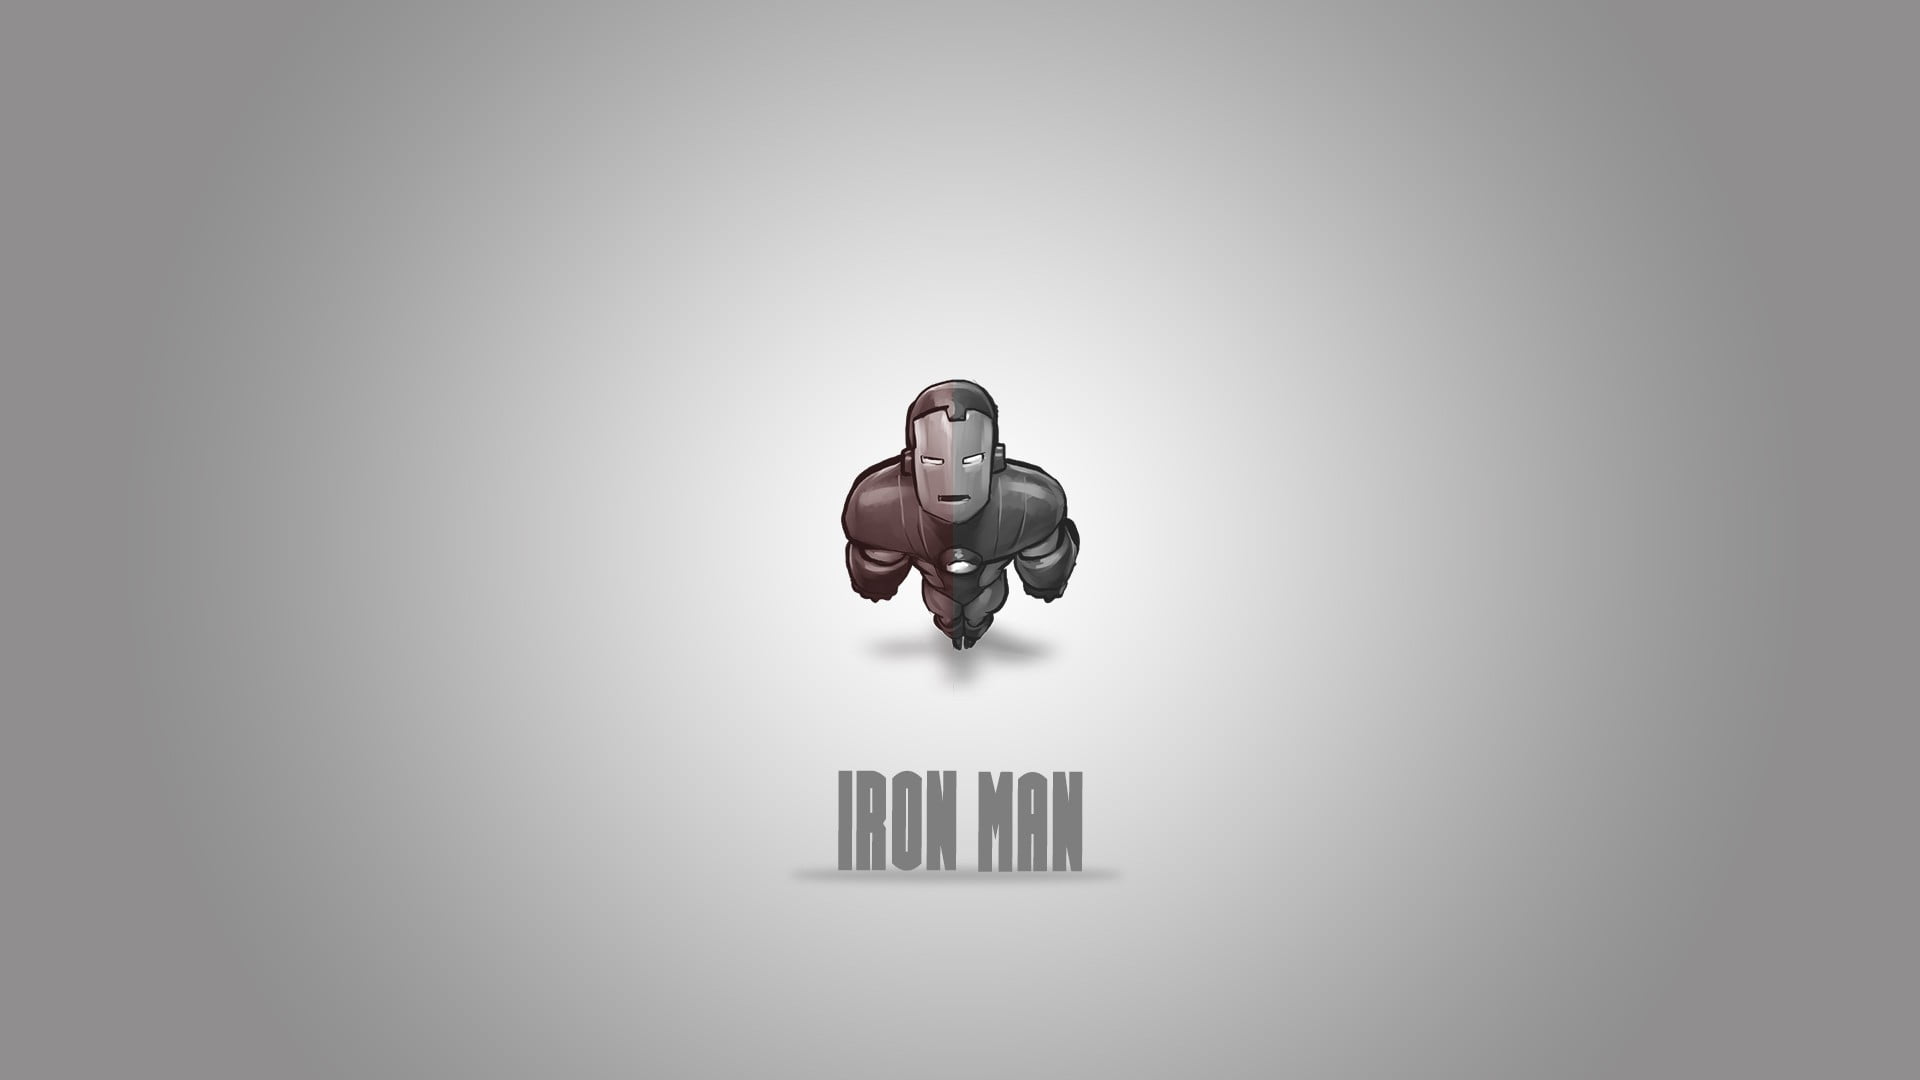 Iron Man logo, cartoon, minimalism, artwork, studio shot, one person